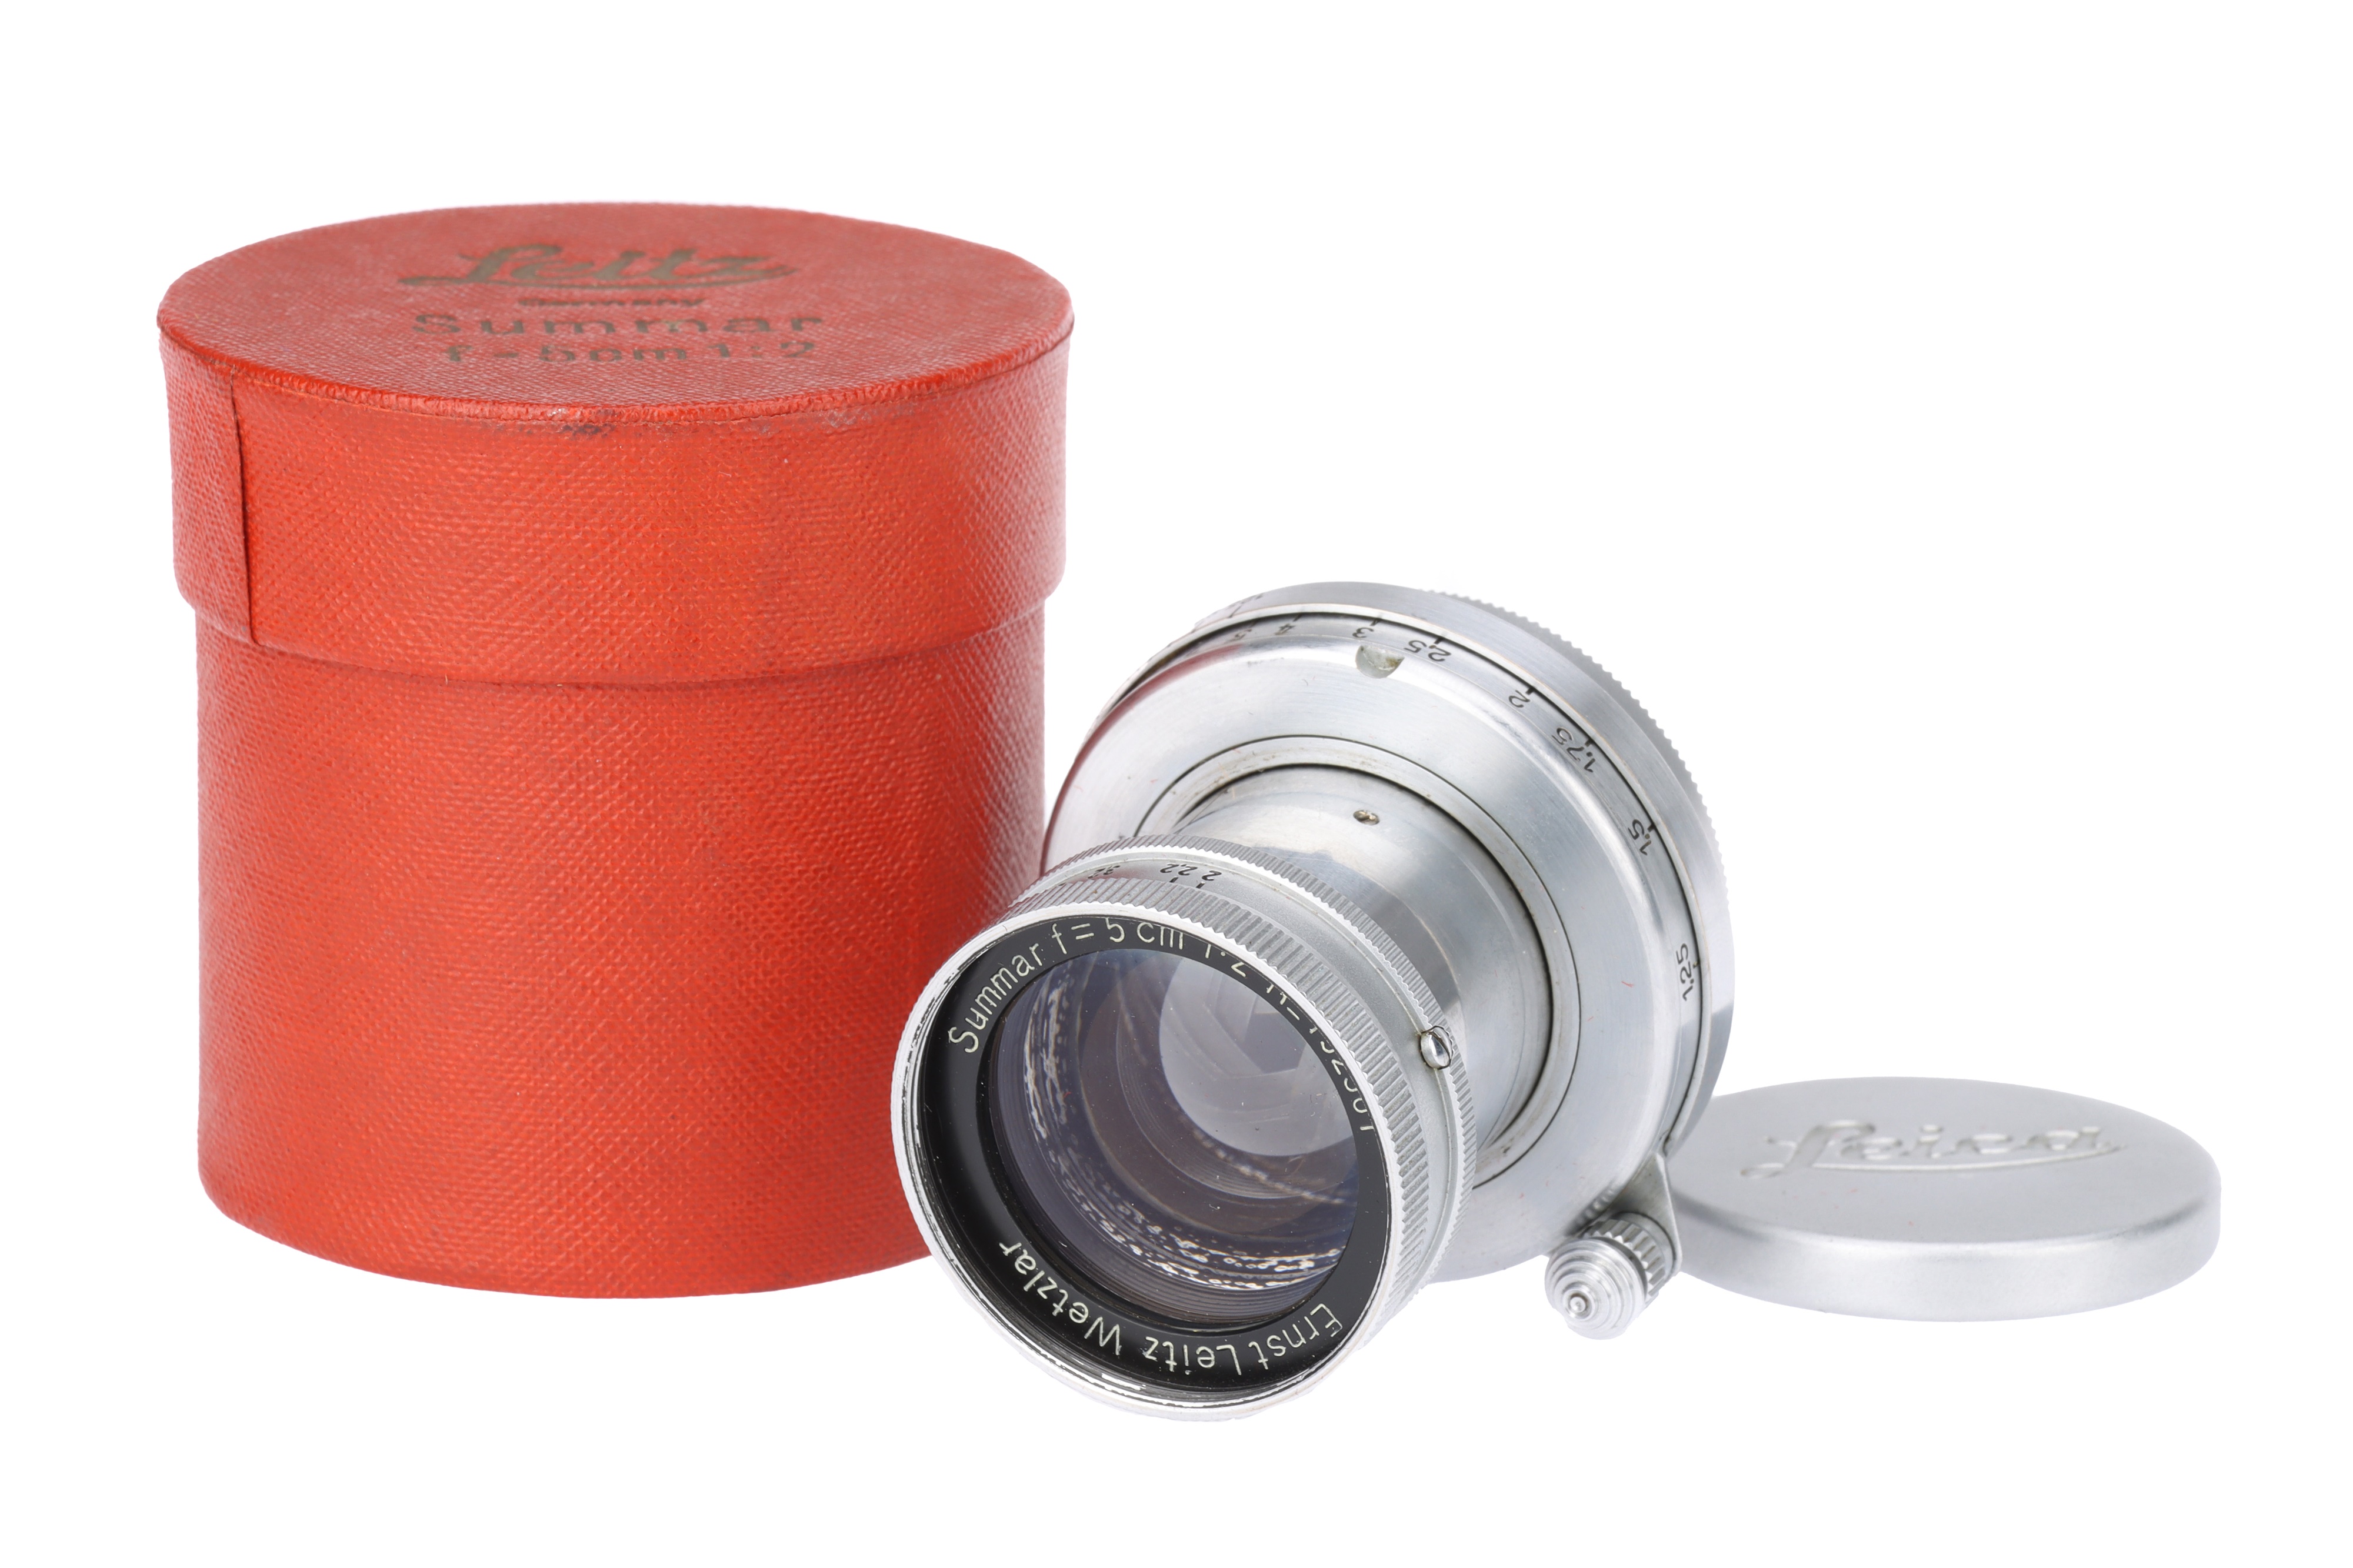 18 A Leitz Summar f/2 50mm Lens,